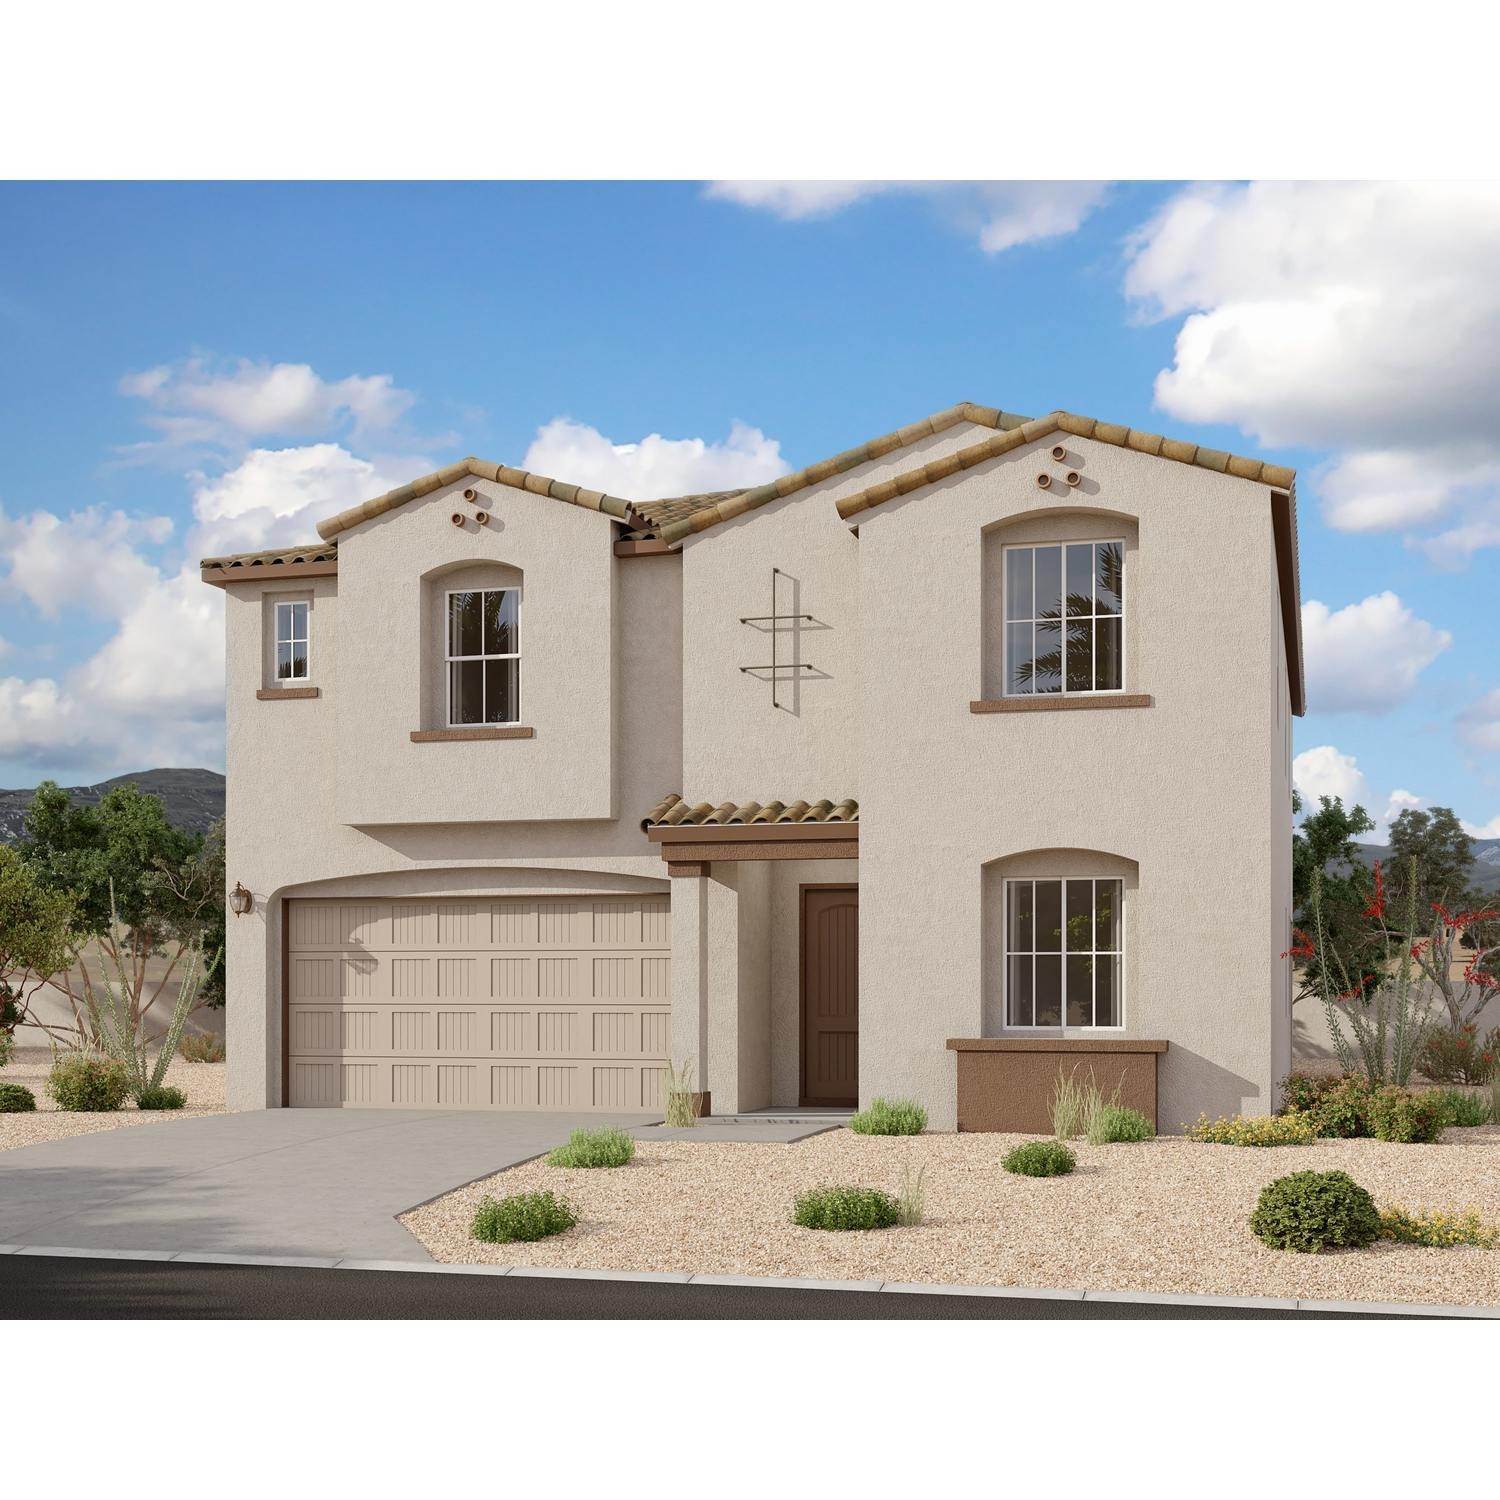 3. Single Family for Sale at Destination At Gateway 6061 South Oxley, Mesa, AZ 85212